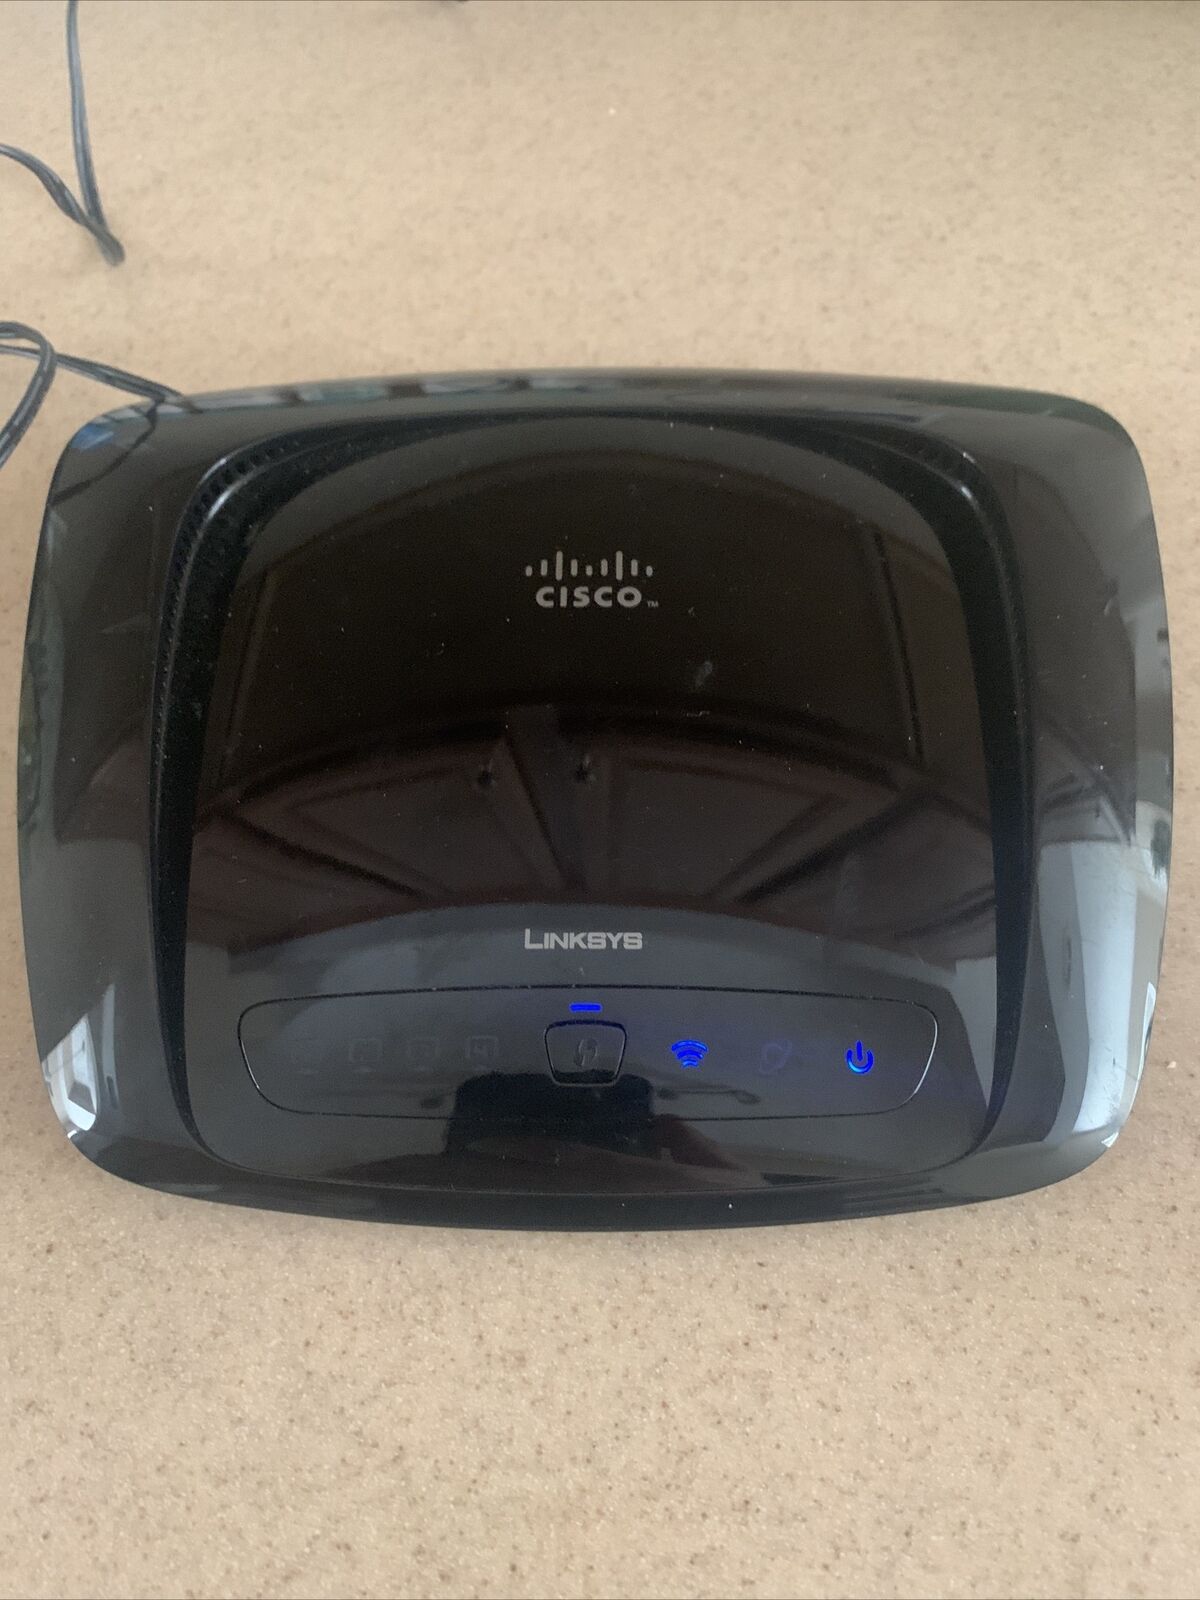 Cisco Linksys WRT160N V3 Wireless-N Broadband Router TESTED